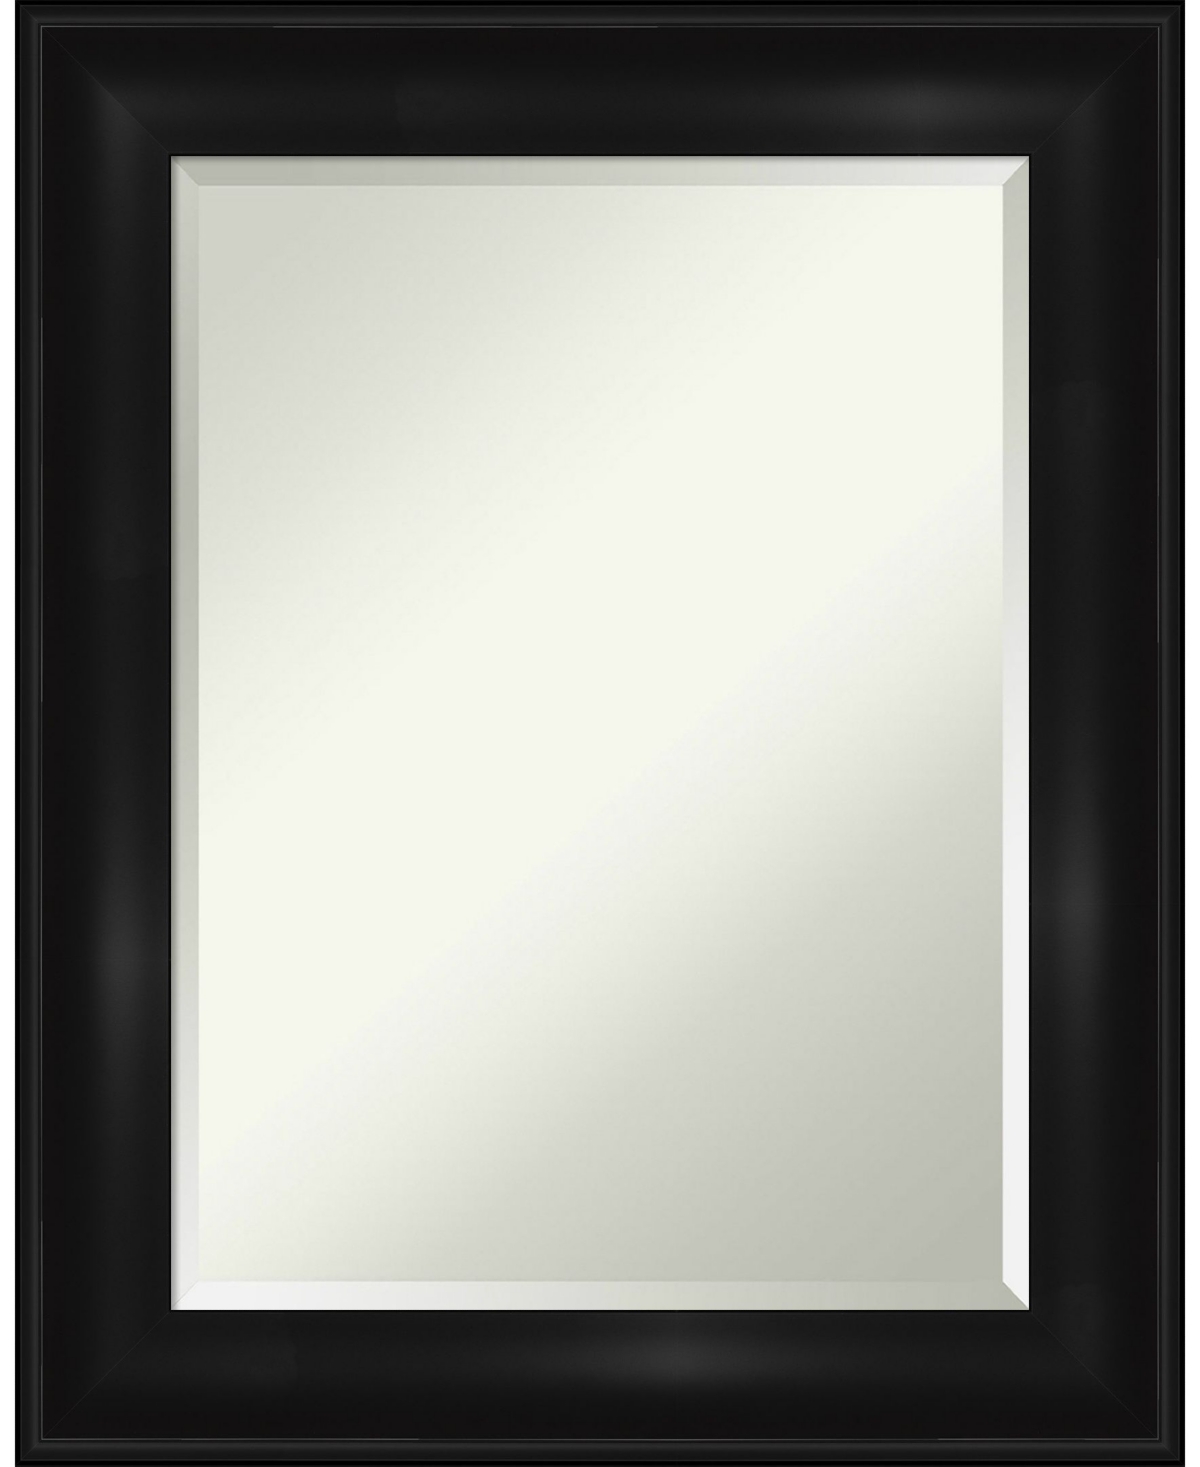 Grand Framed Bathroom Vanity Wall Mirror, 23.75" x 29.75" - Black